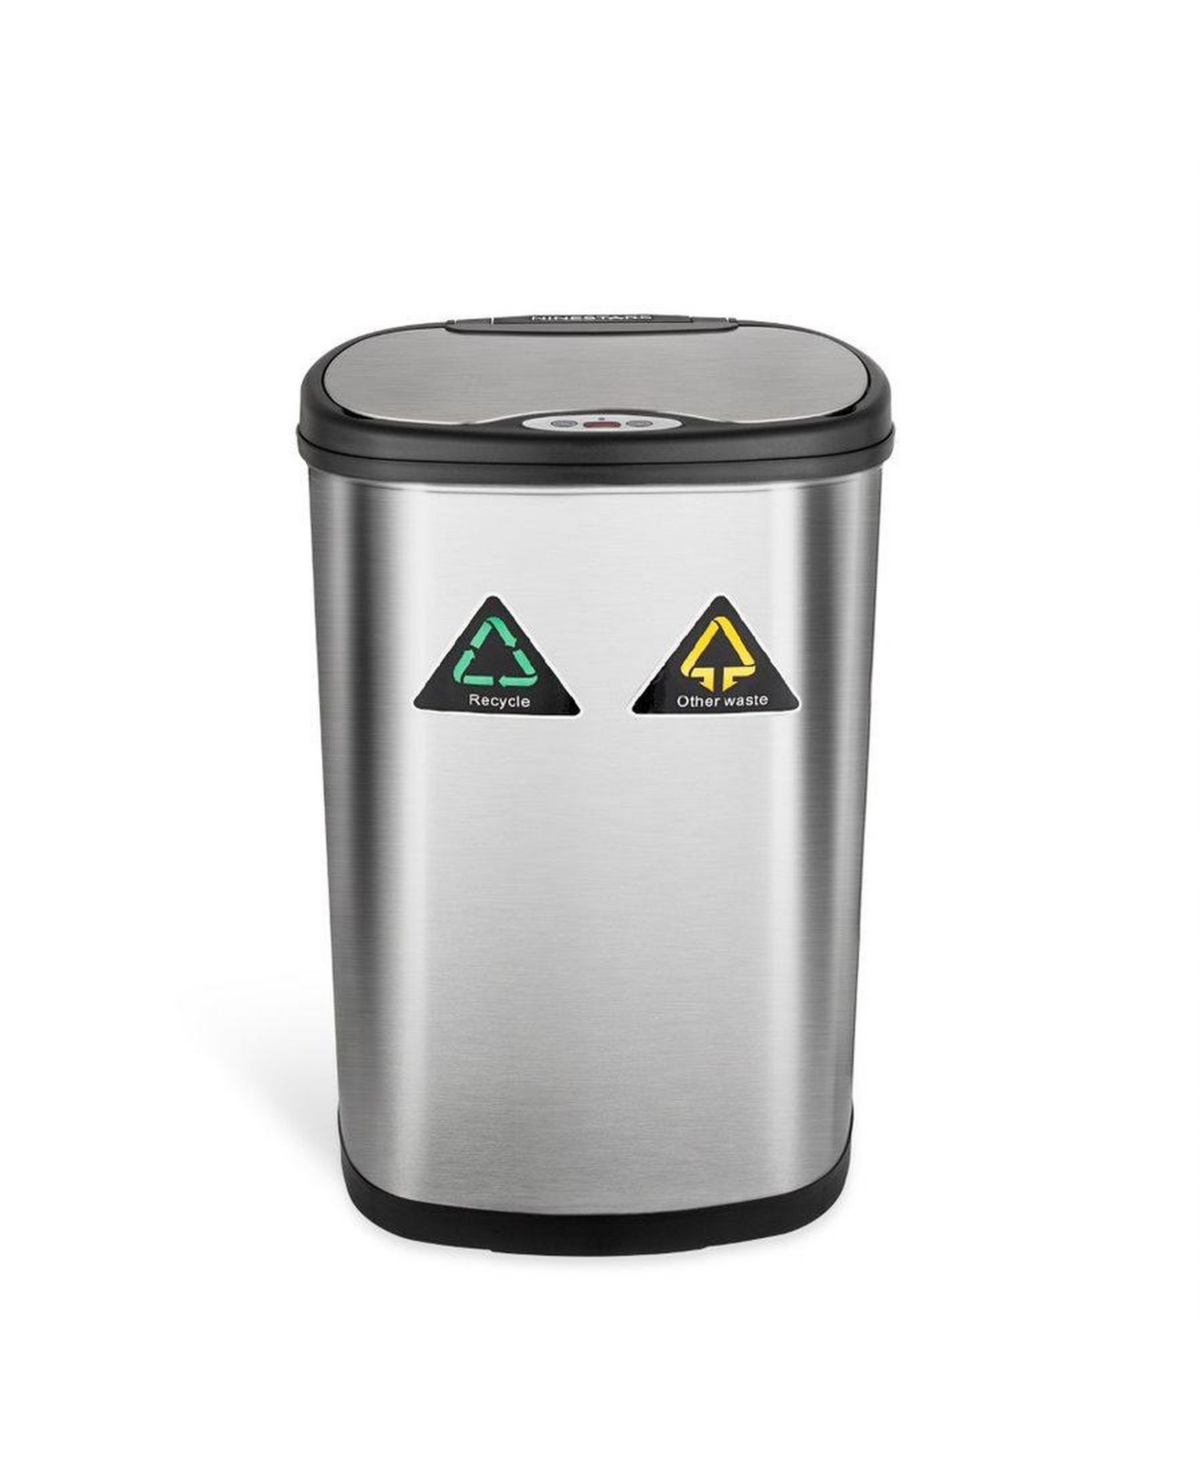 Rectangular Motion Sensor Trash Can, 13.2 Gallon - Silver Tone